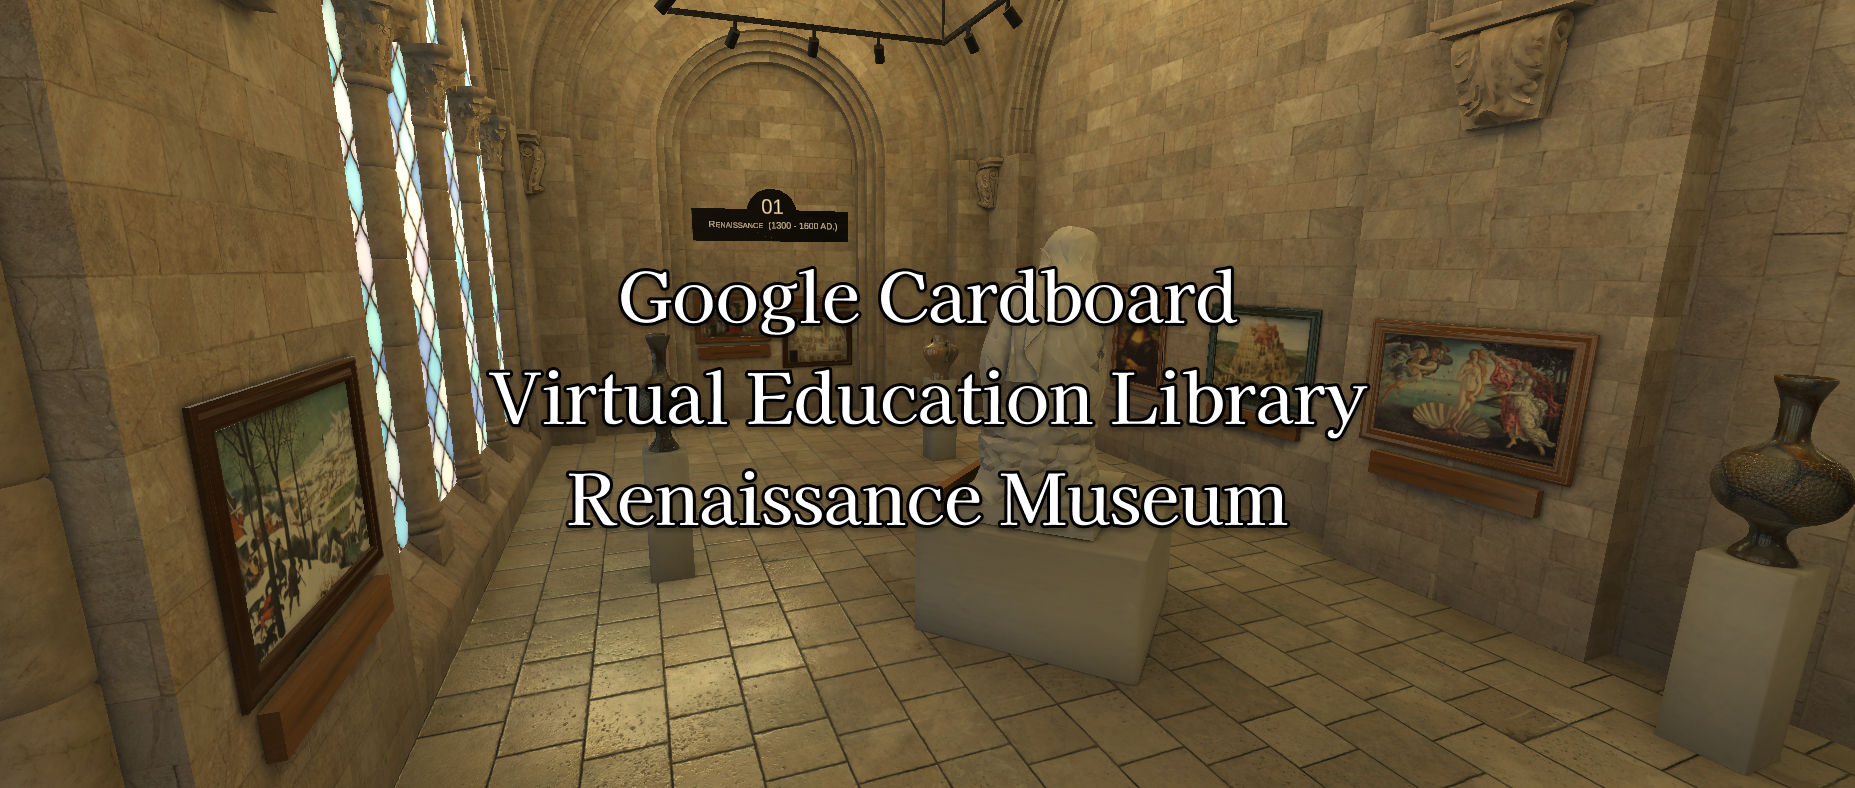 Virtual Education Library (Renaissance Museum)